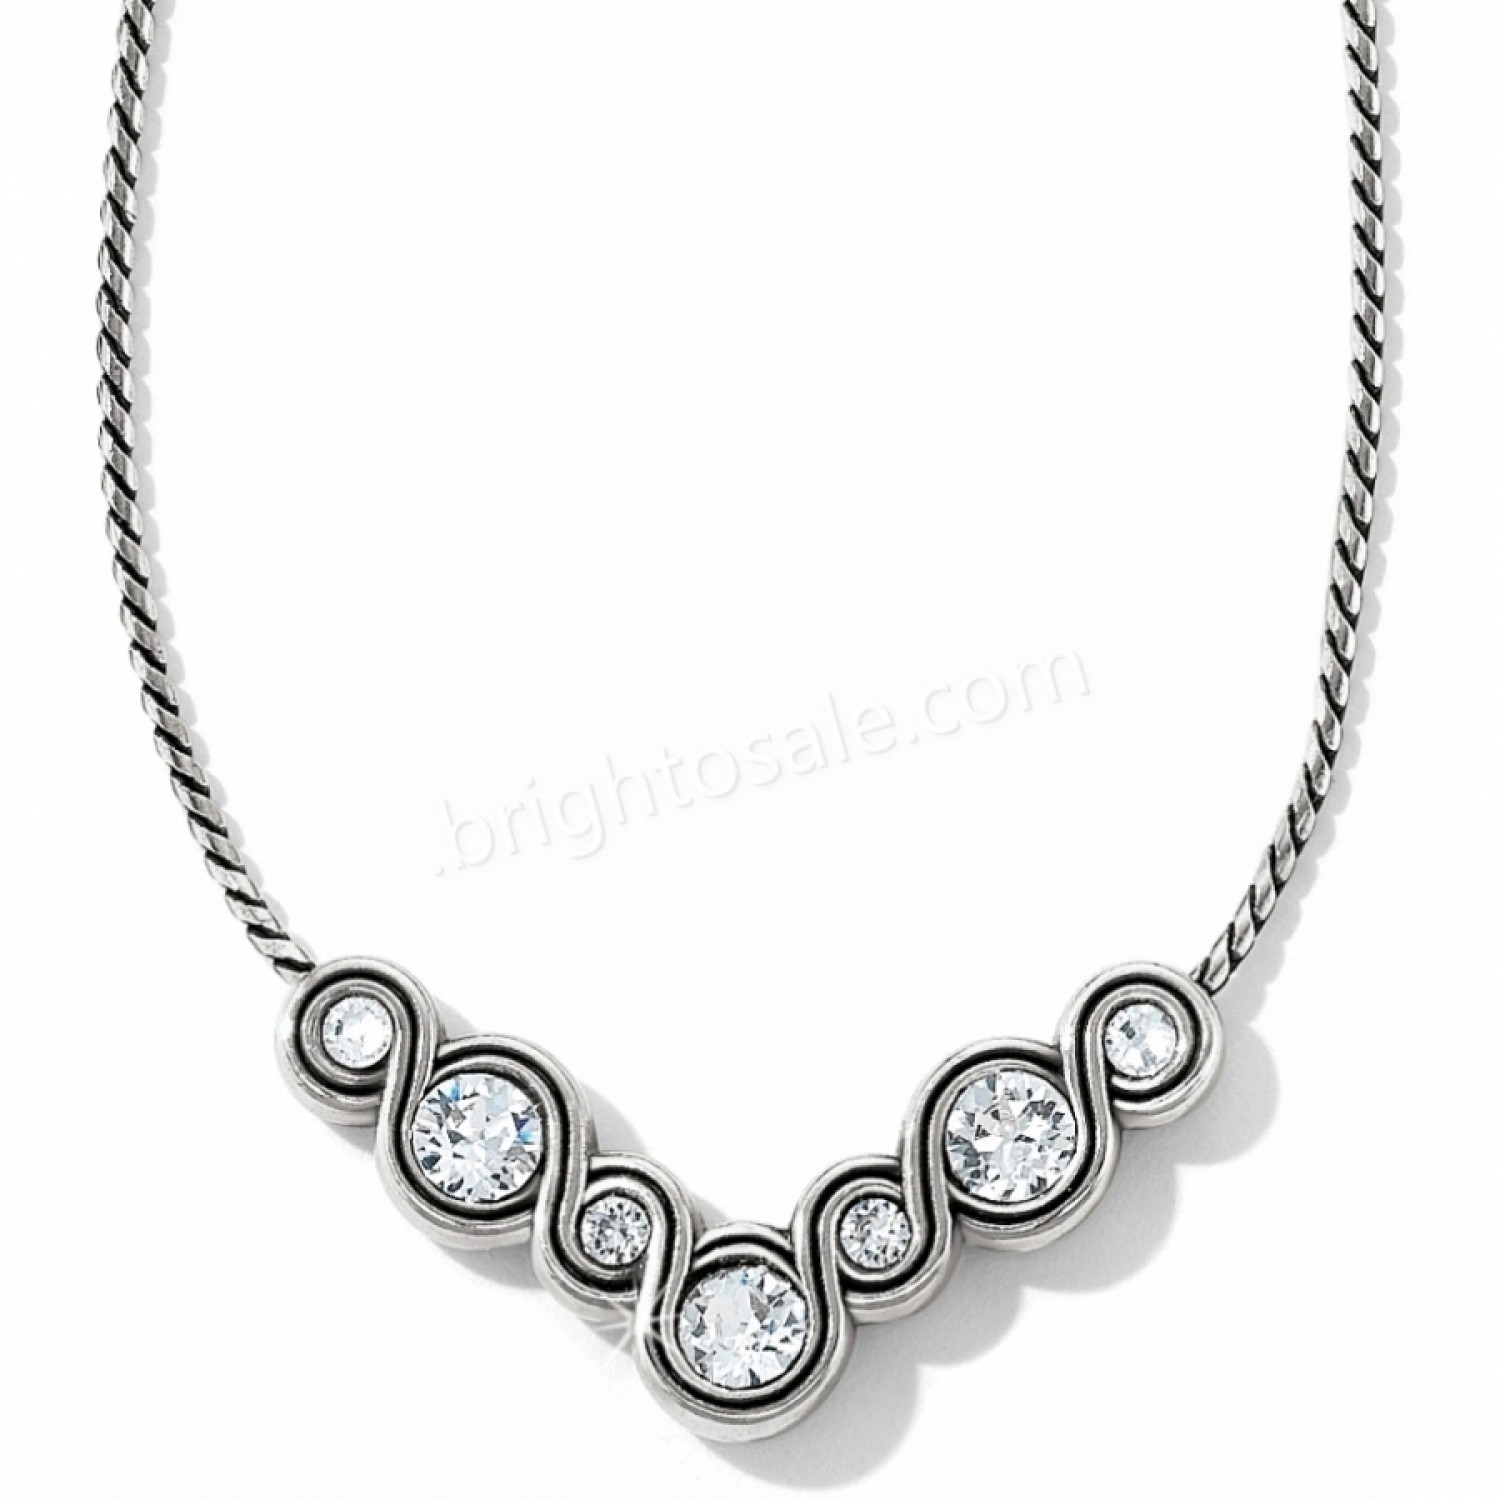 Brighton Collectibles & Online Discount Infinity Sparkle Necklace - Brighton Collectibles & Online Discount Infinity Sparkle Necklace